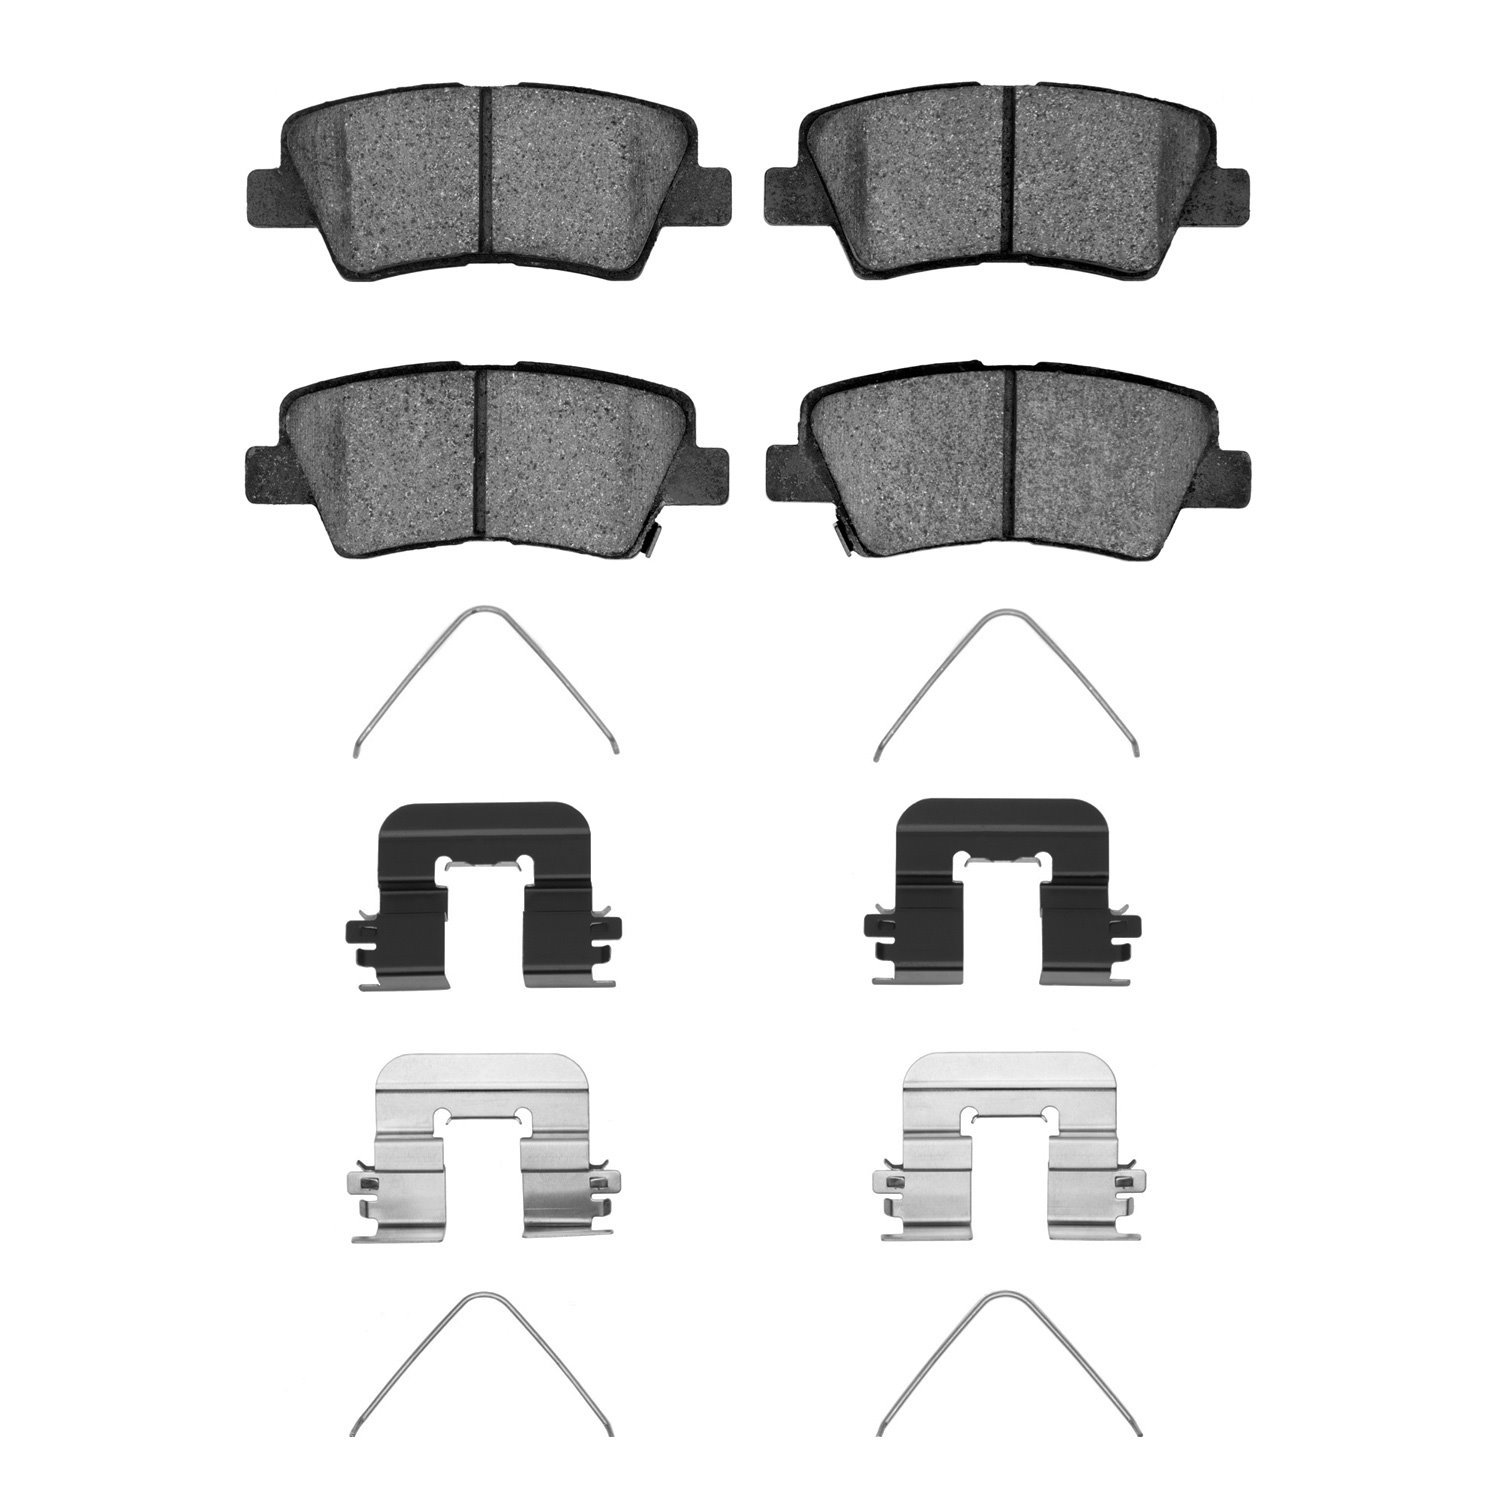 1310-1813-01 3000-Series Ceramic Brake Pads & Hardware Kit, Fits Select Kia/Hyundai/Genesis, Position: Rear